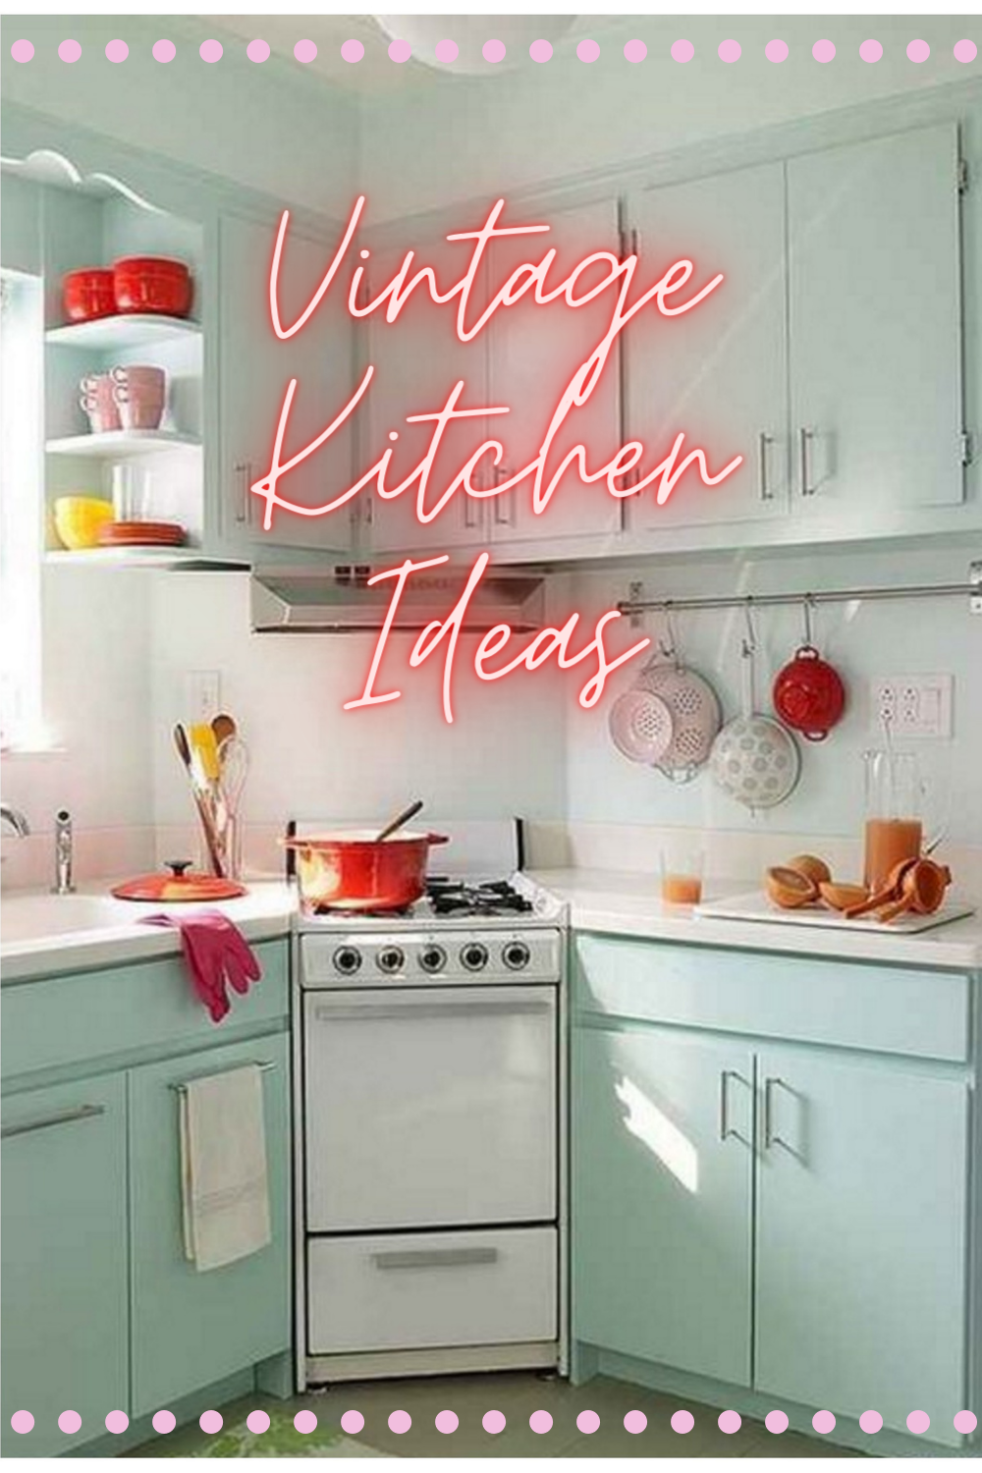 https://bluewillowlanecom.files.wordpress.com/2020/10/vintage-kitchen-ideas-1.png?w=982